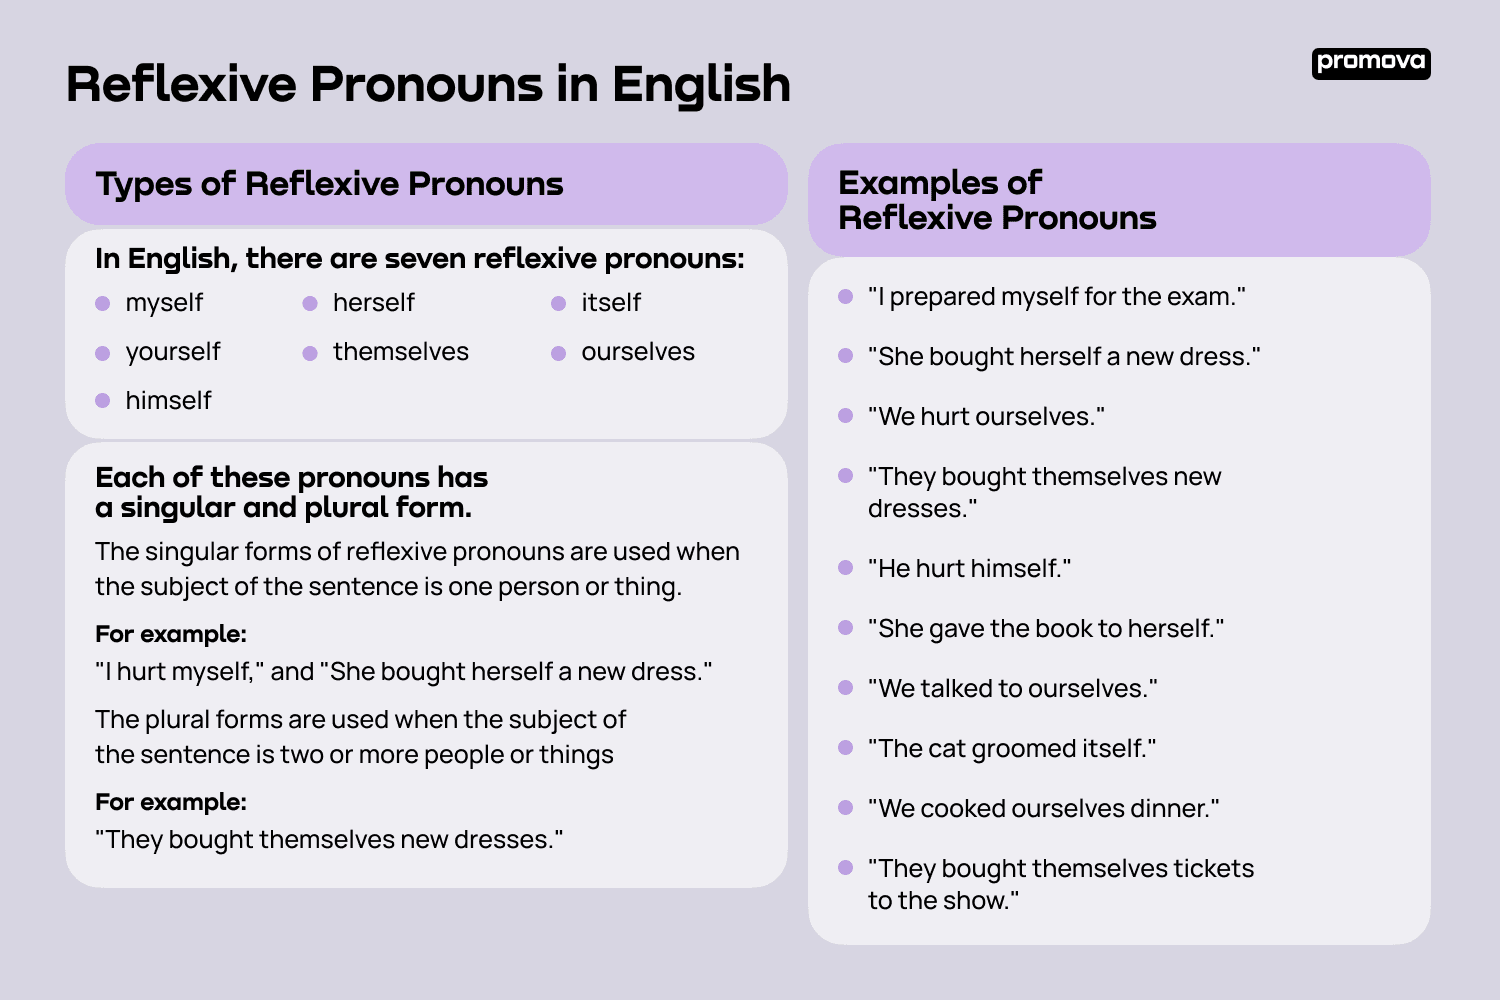 Types of Reflexive Pronouns